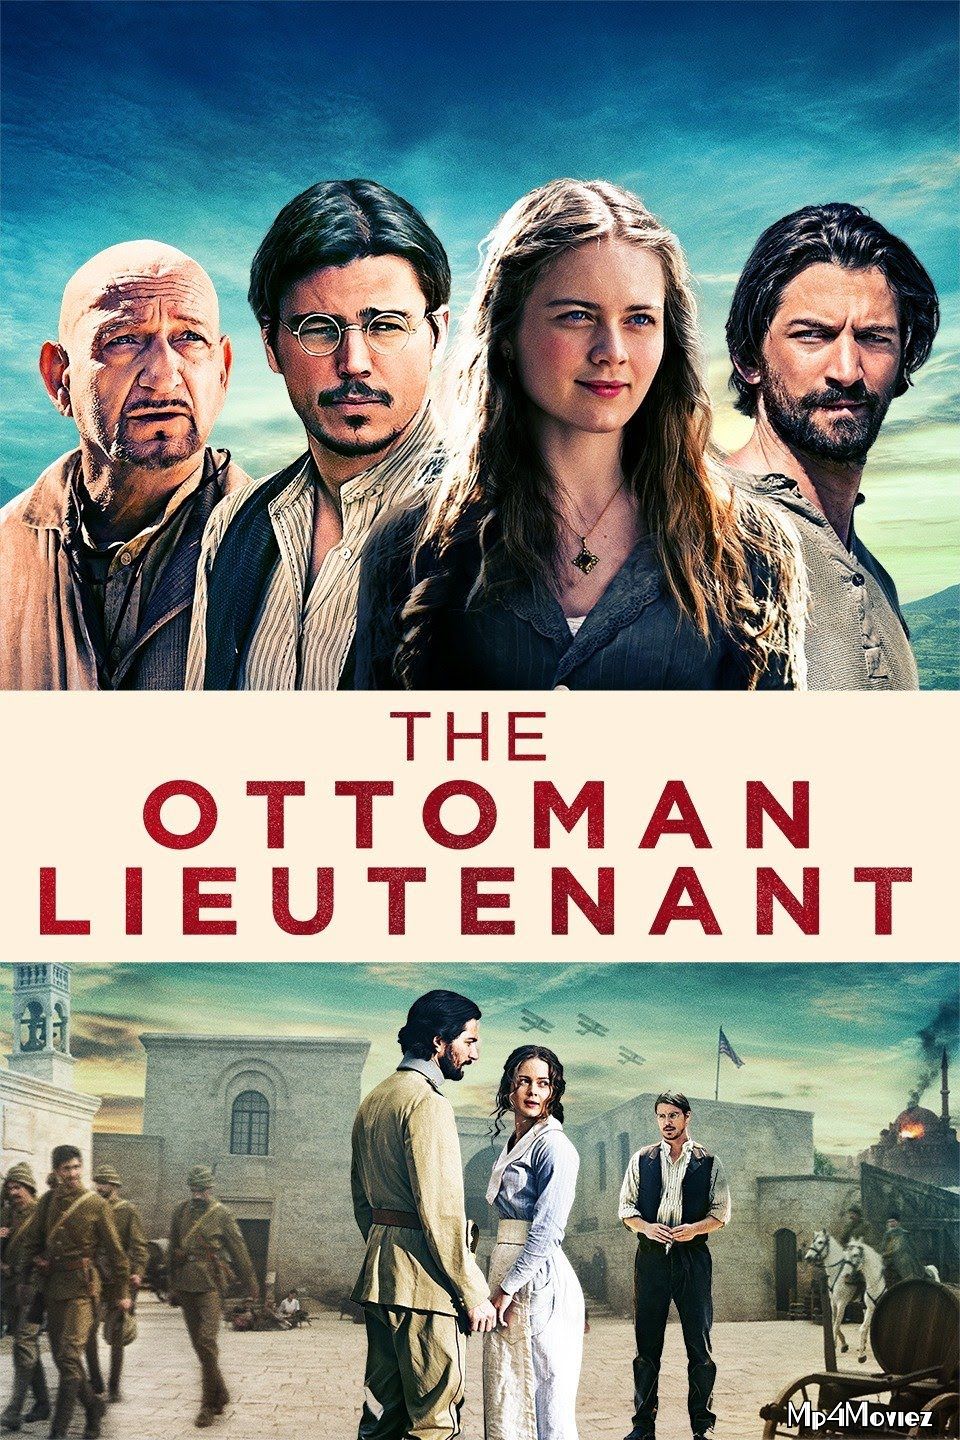 The Ottoman Lieutenant (2017) Hindi Dubbed Movie BluRay download full movie